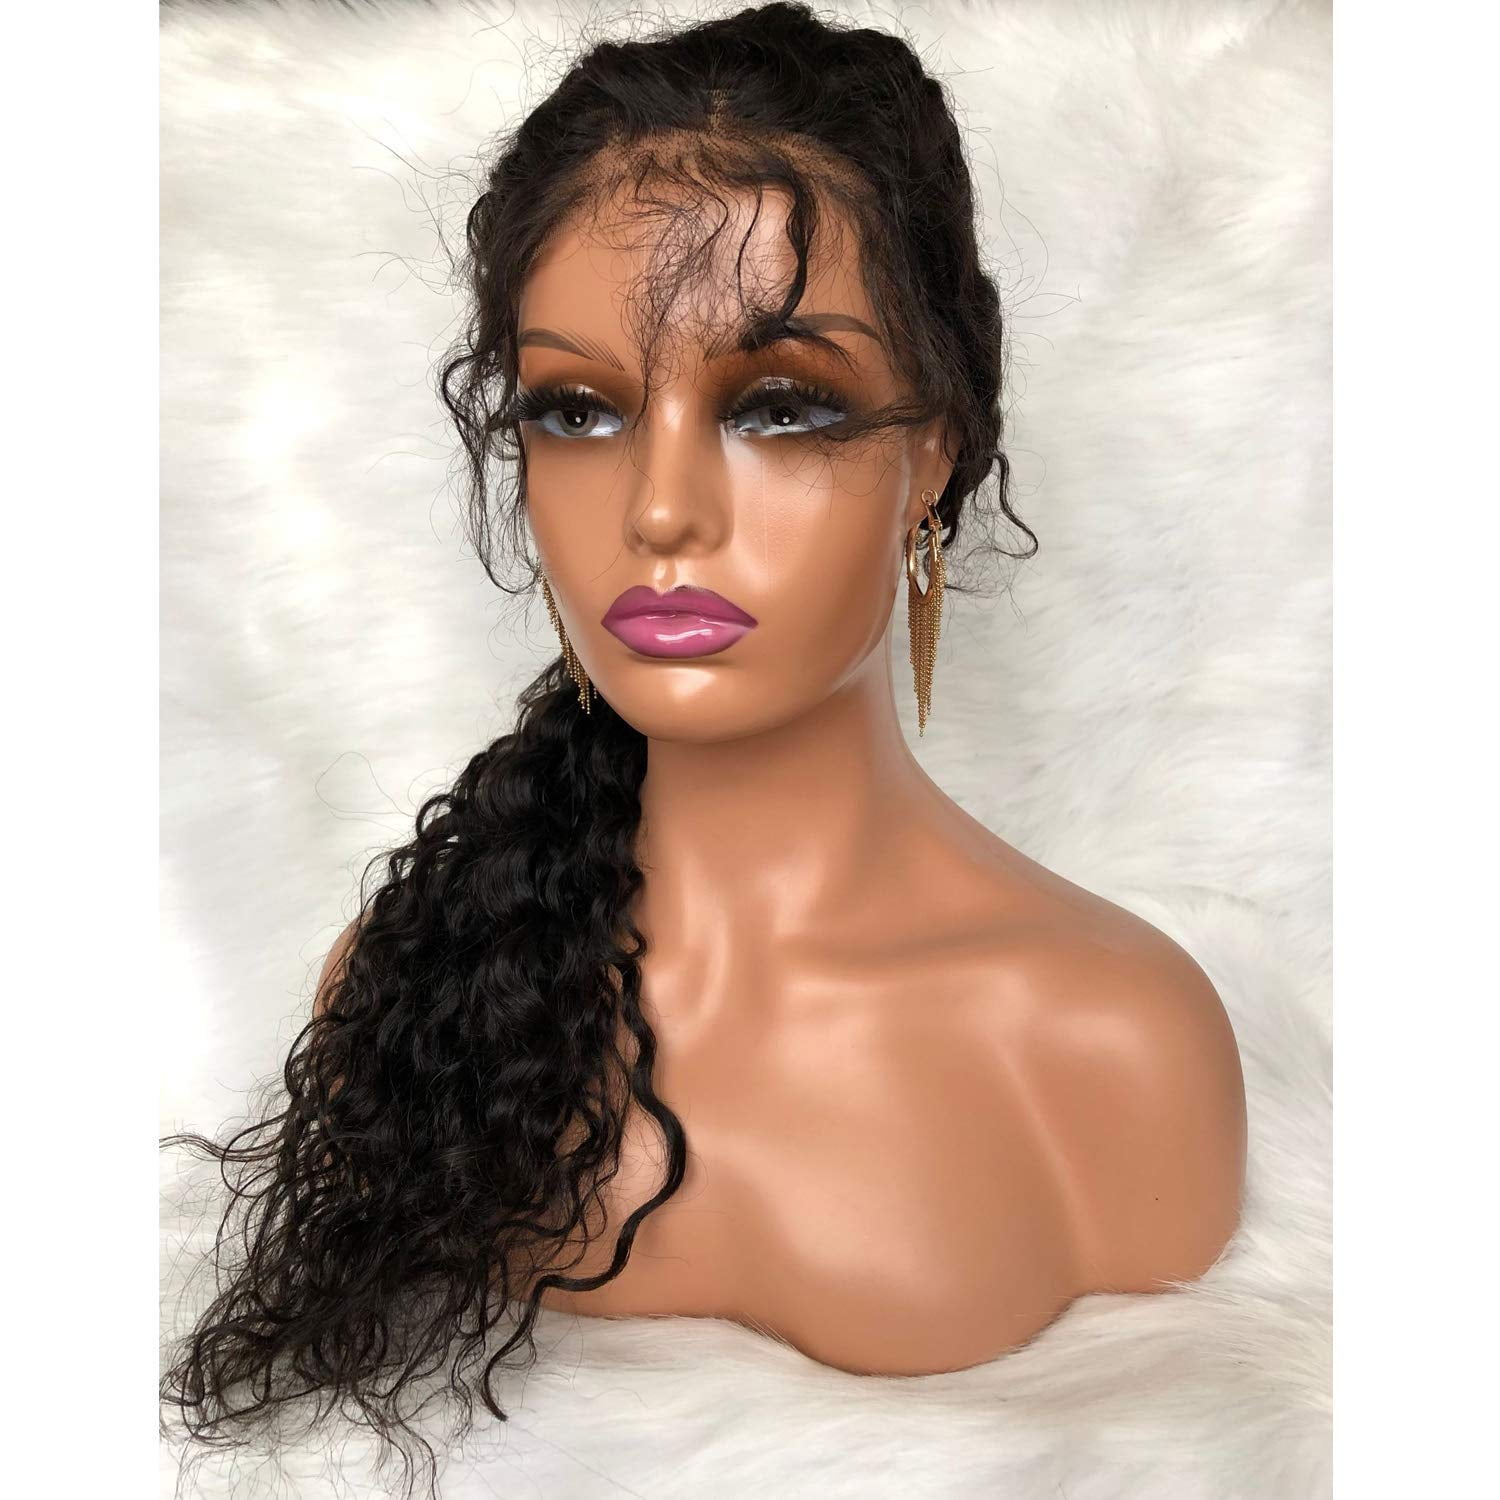 Realistic Female Mannequin Head with Shoulder Manikin PVC Head